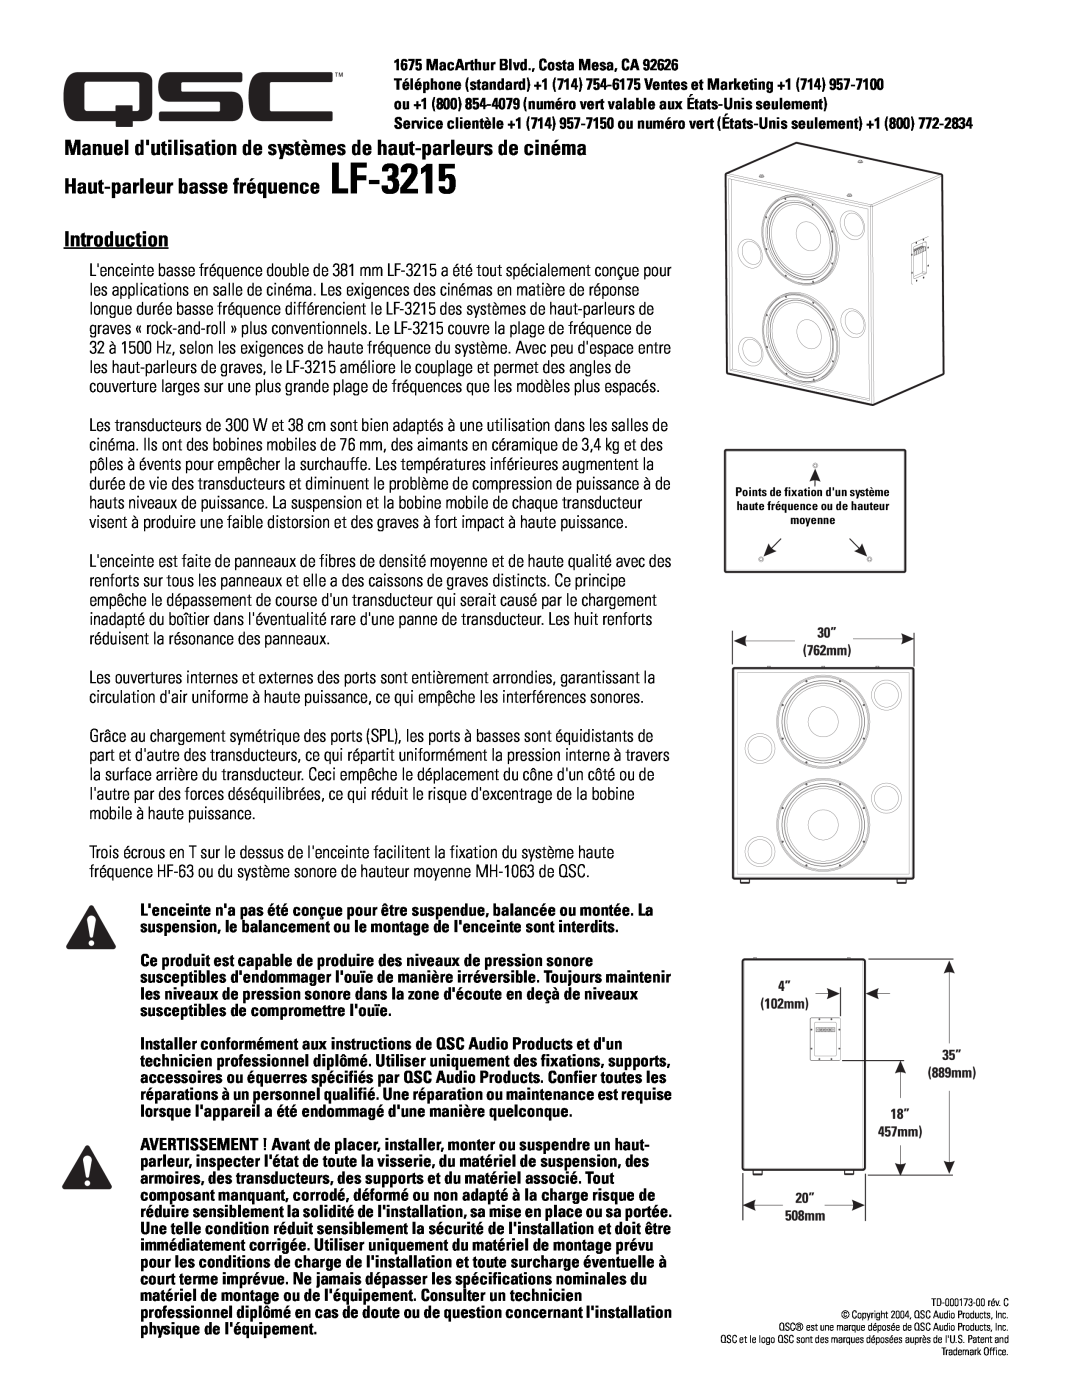 QSC Audio SC-322X specifications Introduction, MacArthur Blvd., Costa Mesa, CA 